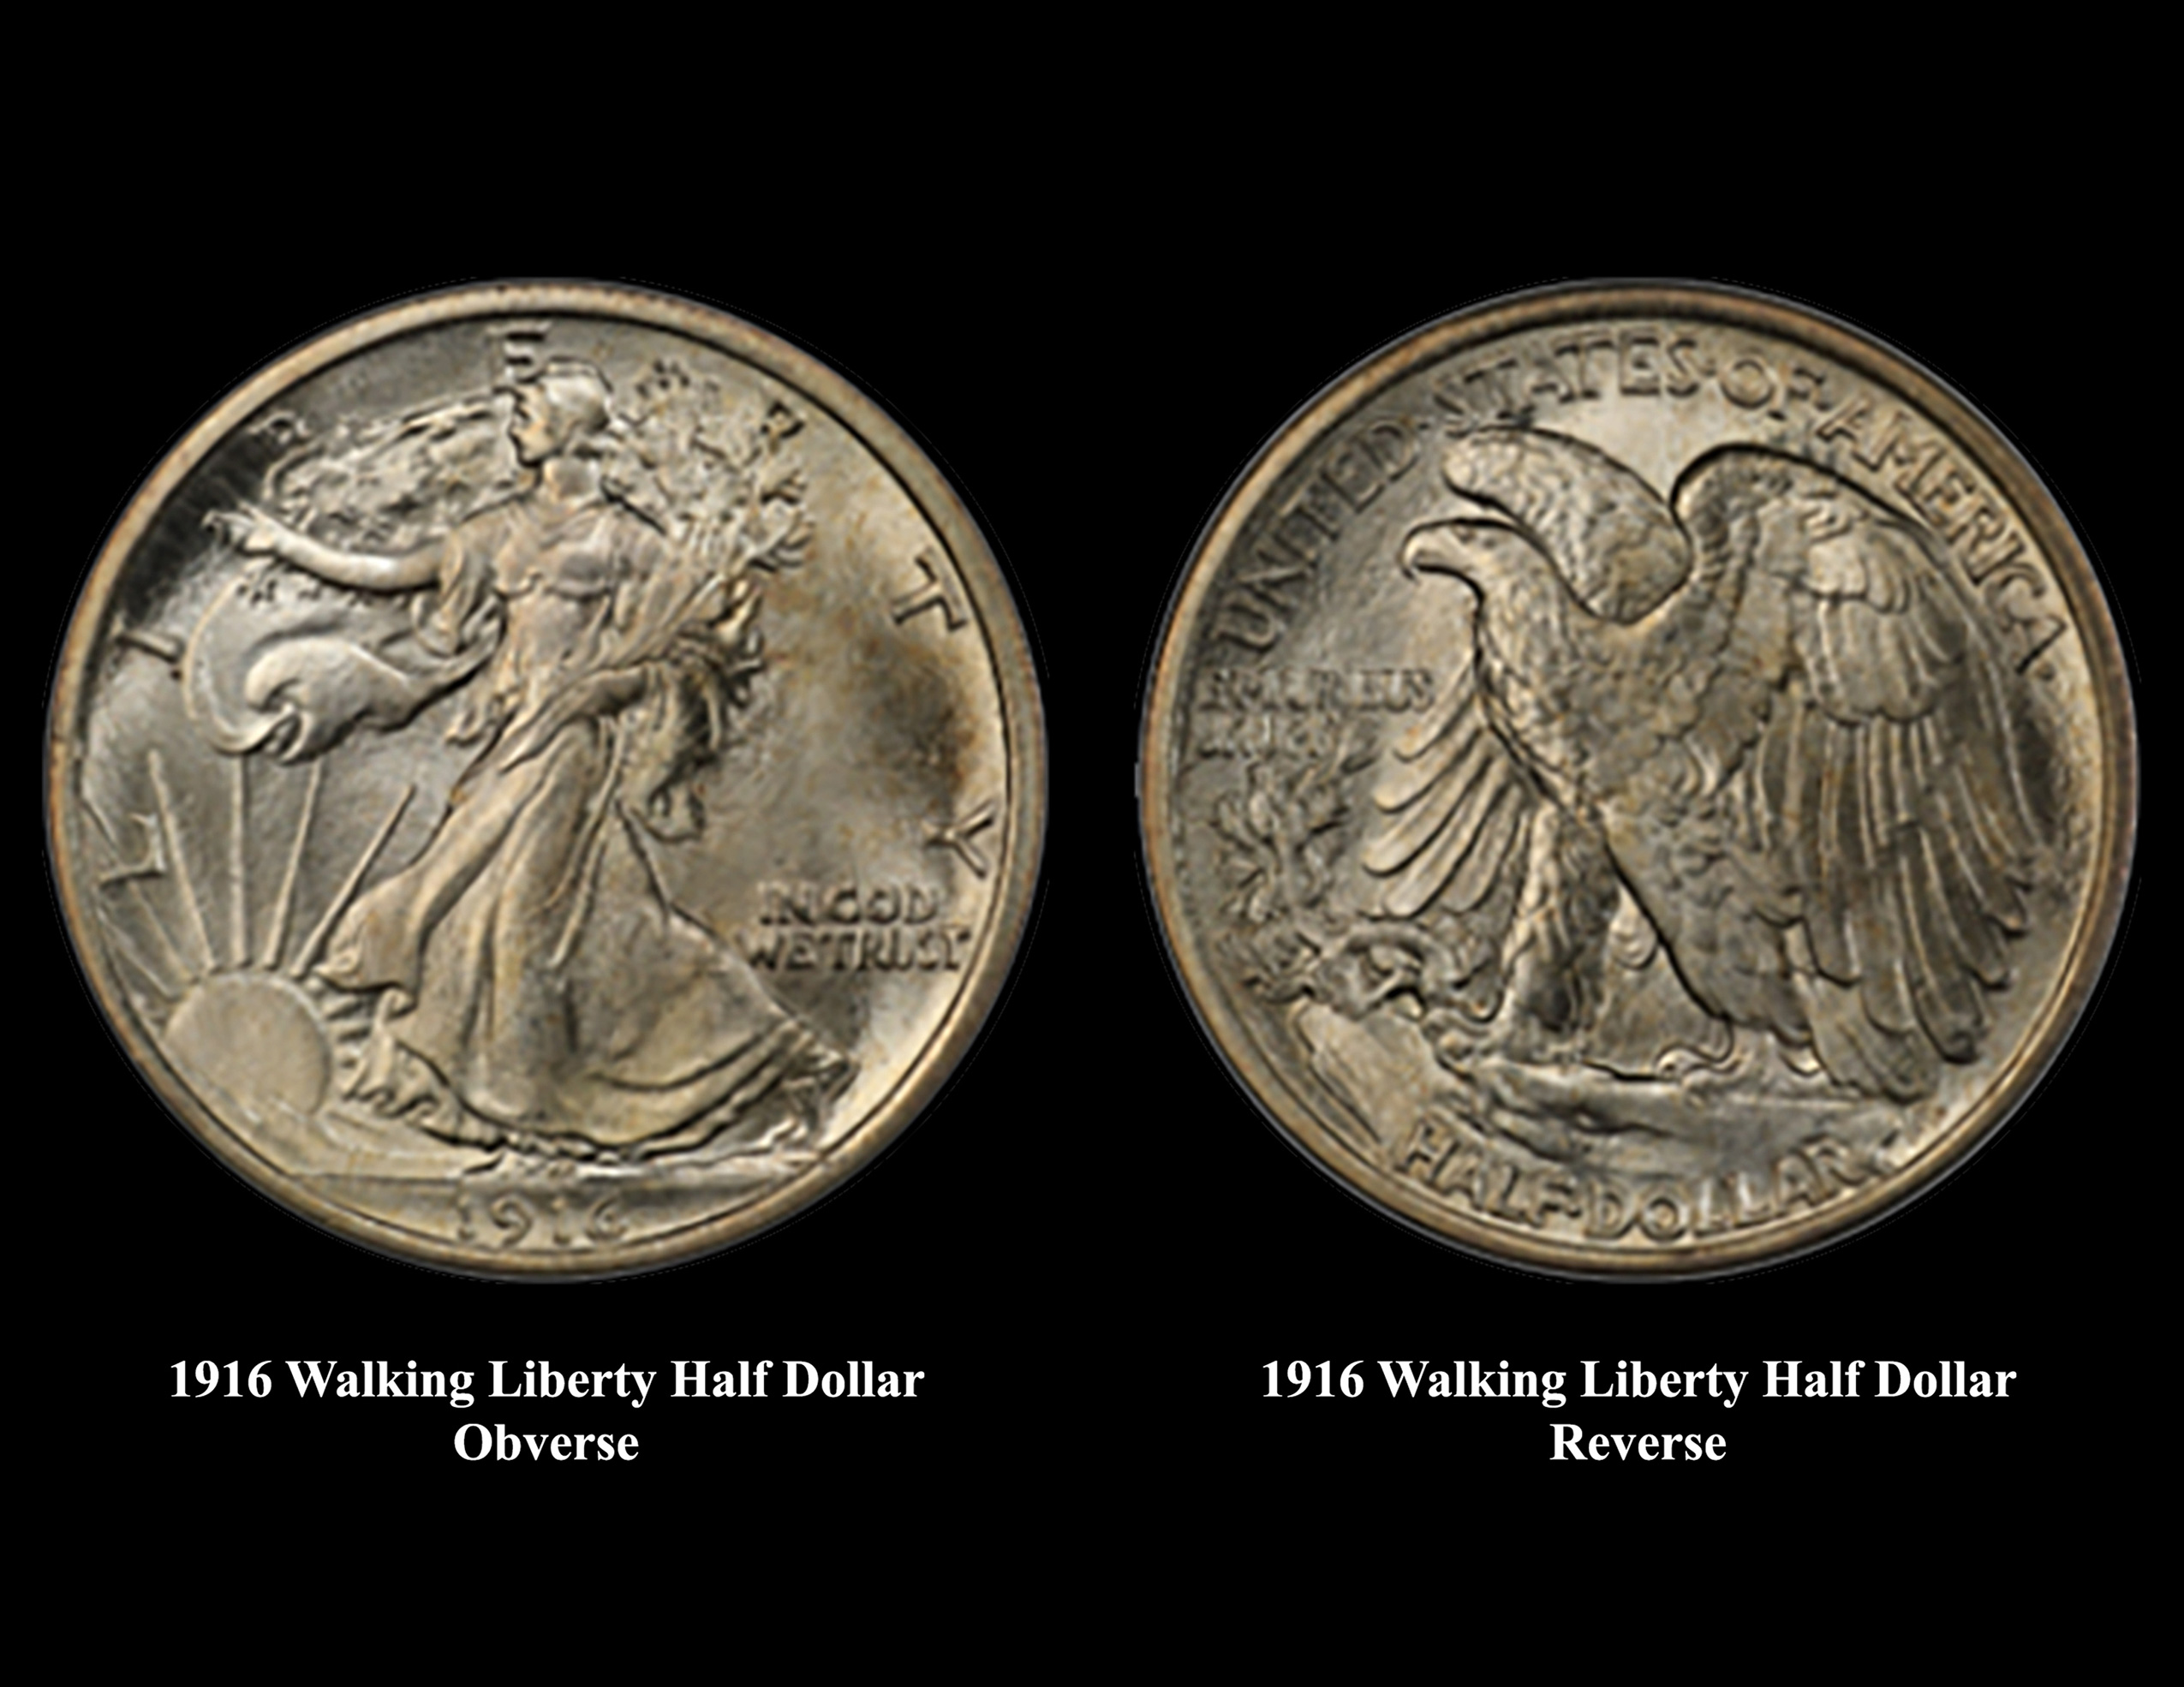 2026 Best of the Mint - 1916 Walking Liberty Half Dollar